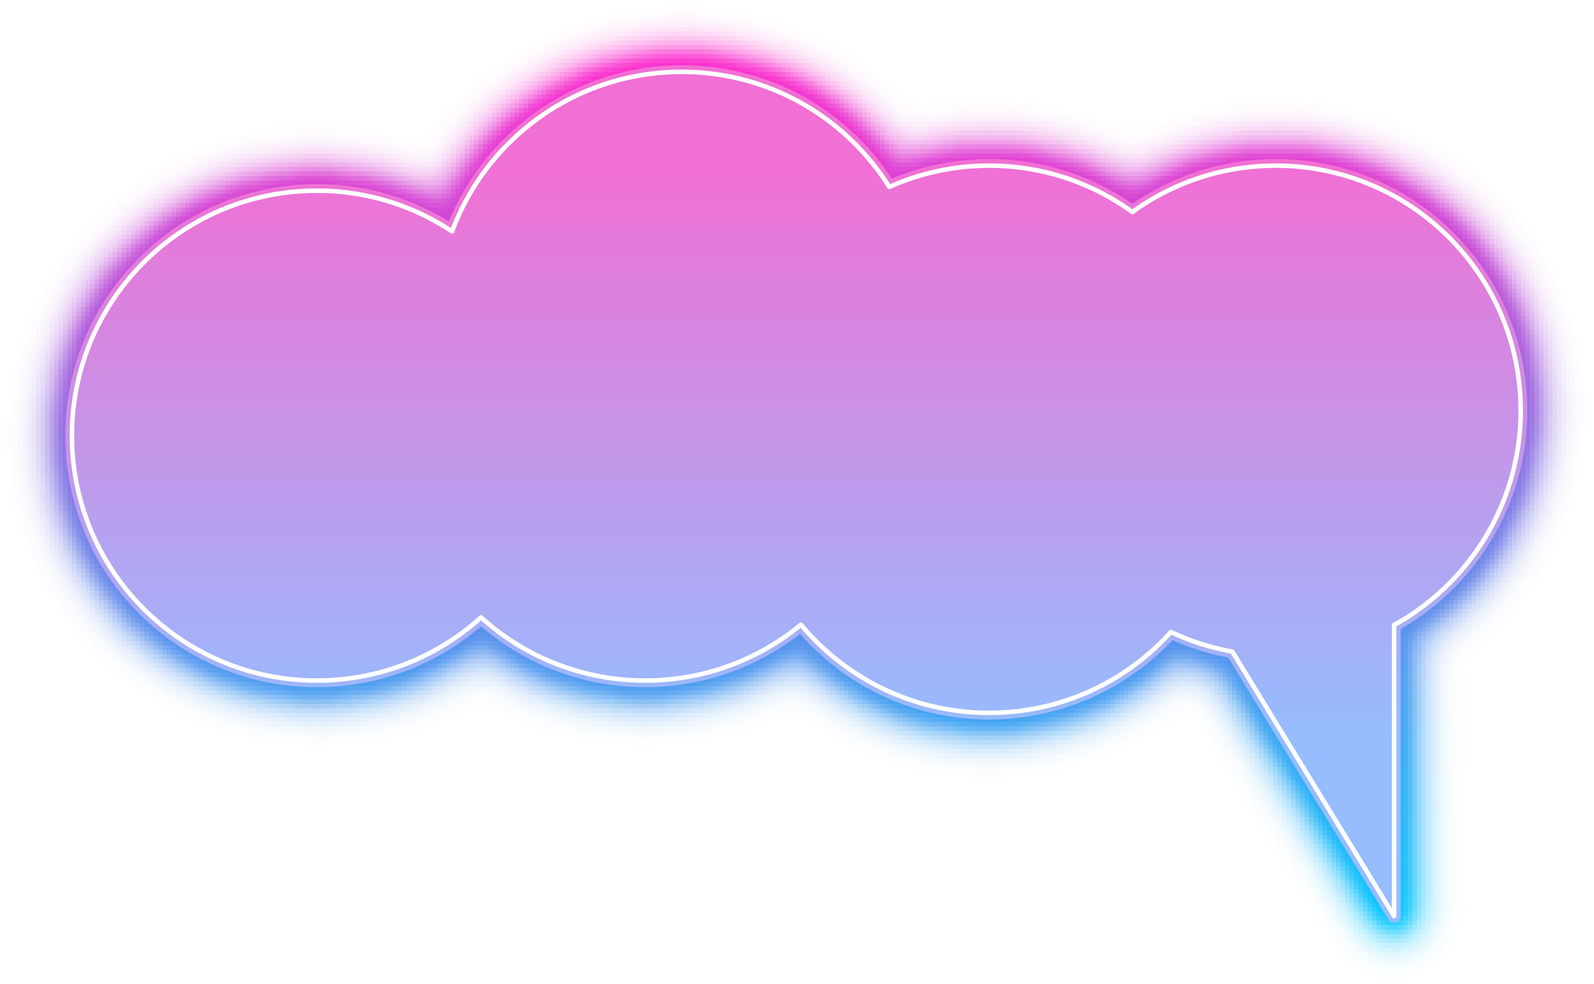 Neon speech bubble quote icon. Talk bubble cloud speech element in purple and blue.